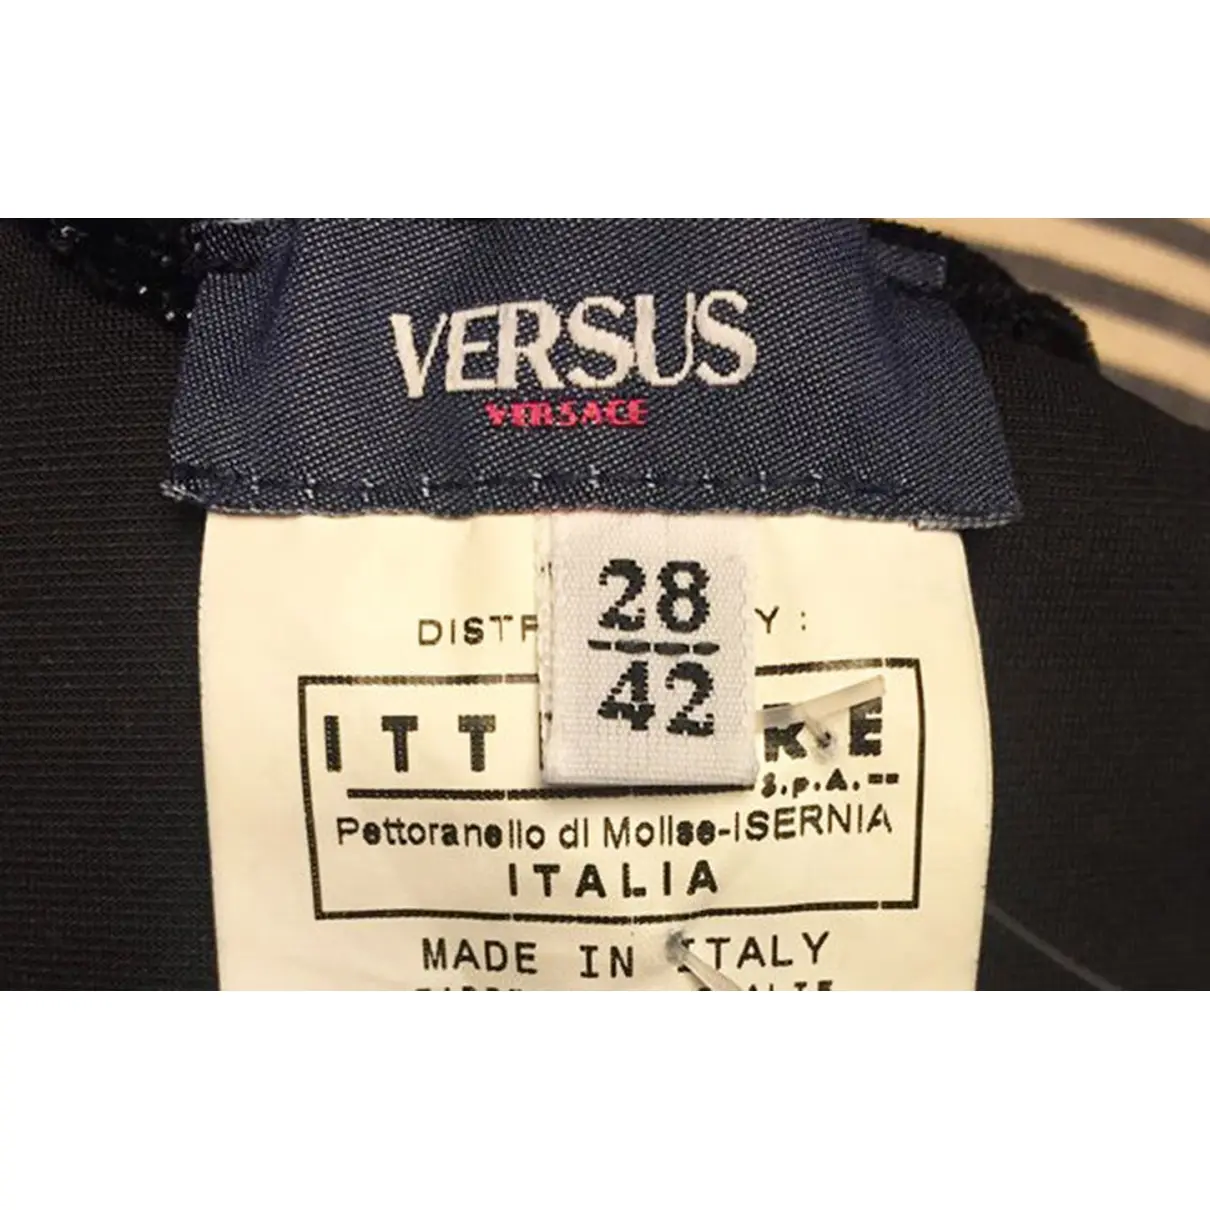 Buy Versus Vest online - Vintage